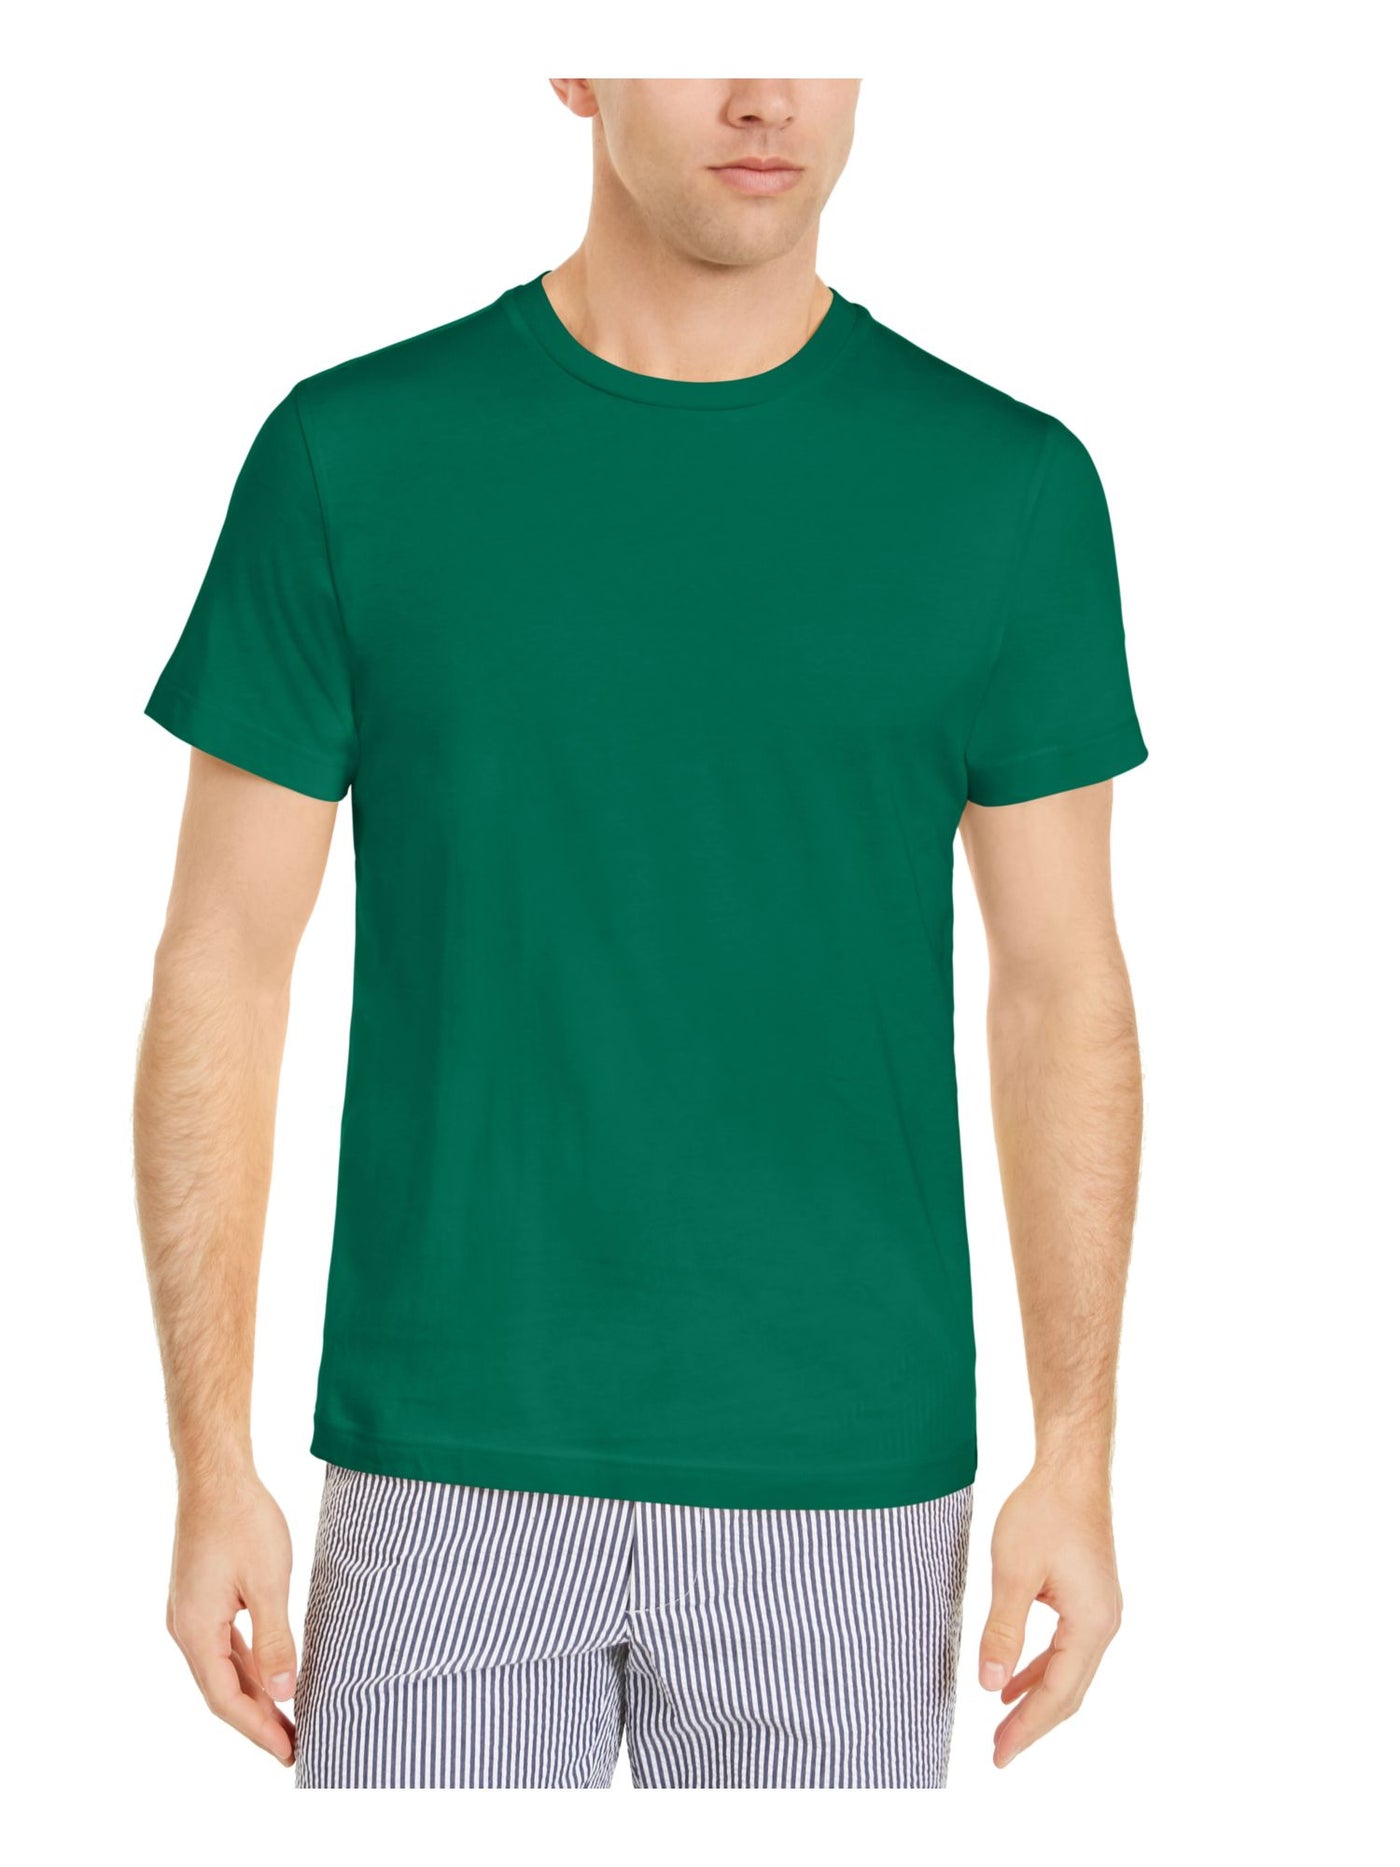 CLUBROOM Mens Green Lightweight, Classic Fit Moisture Wicking T-Shirt L